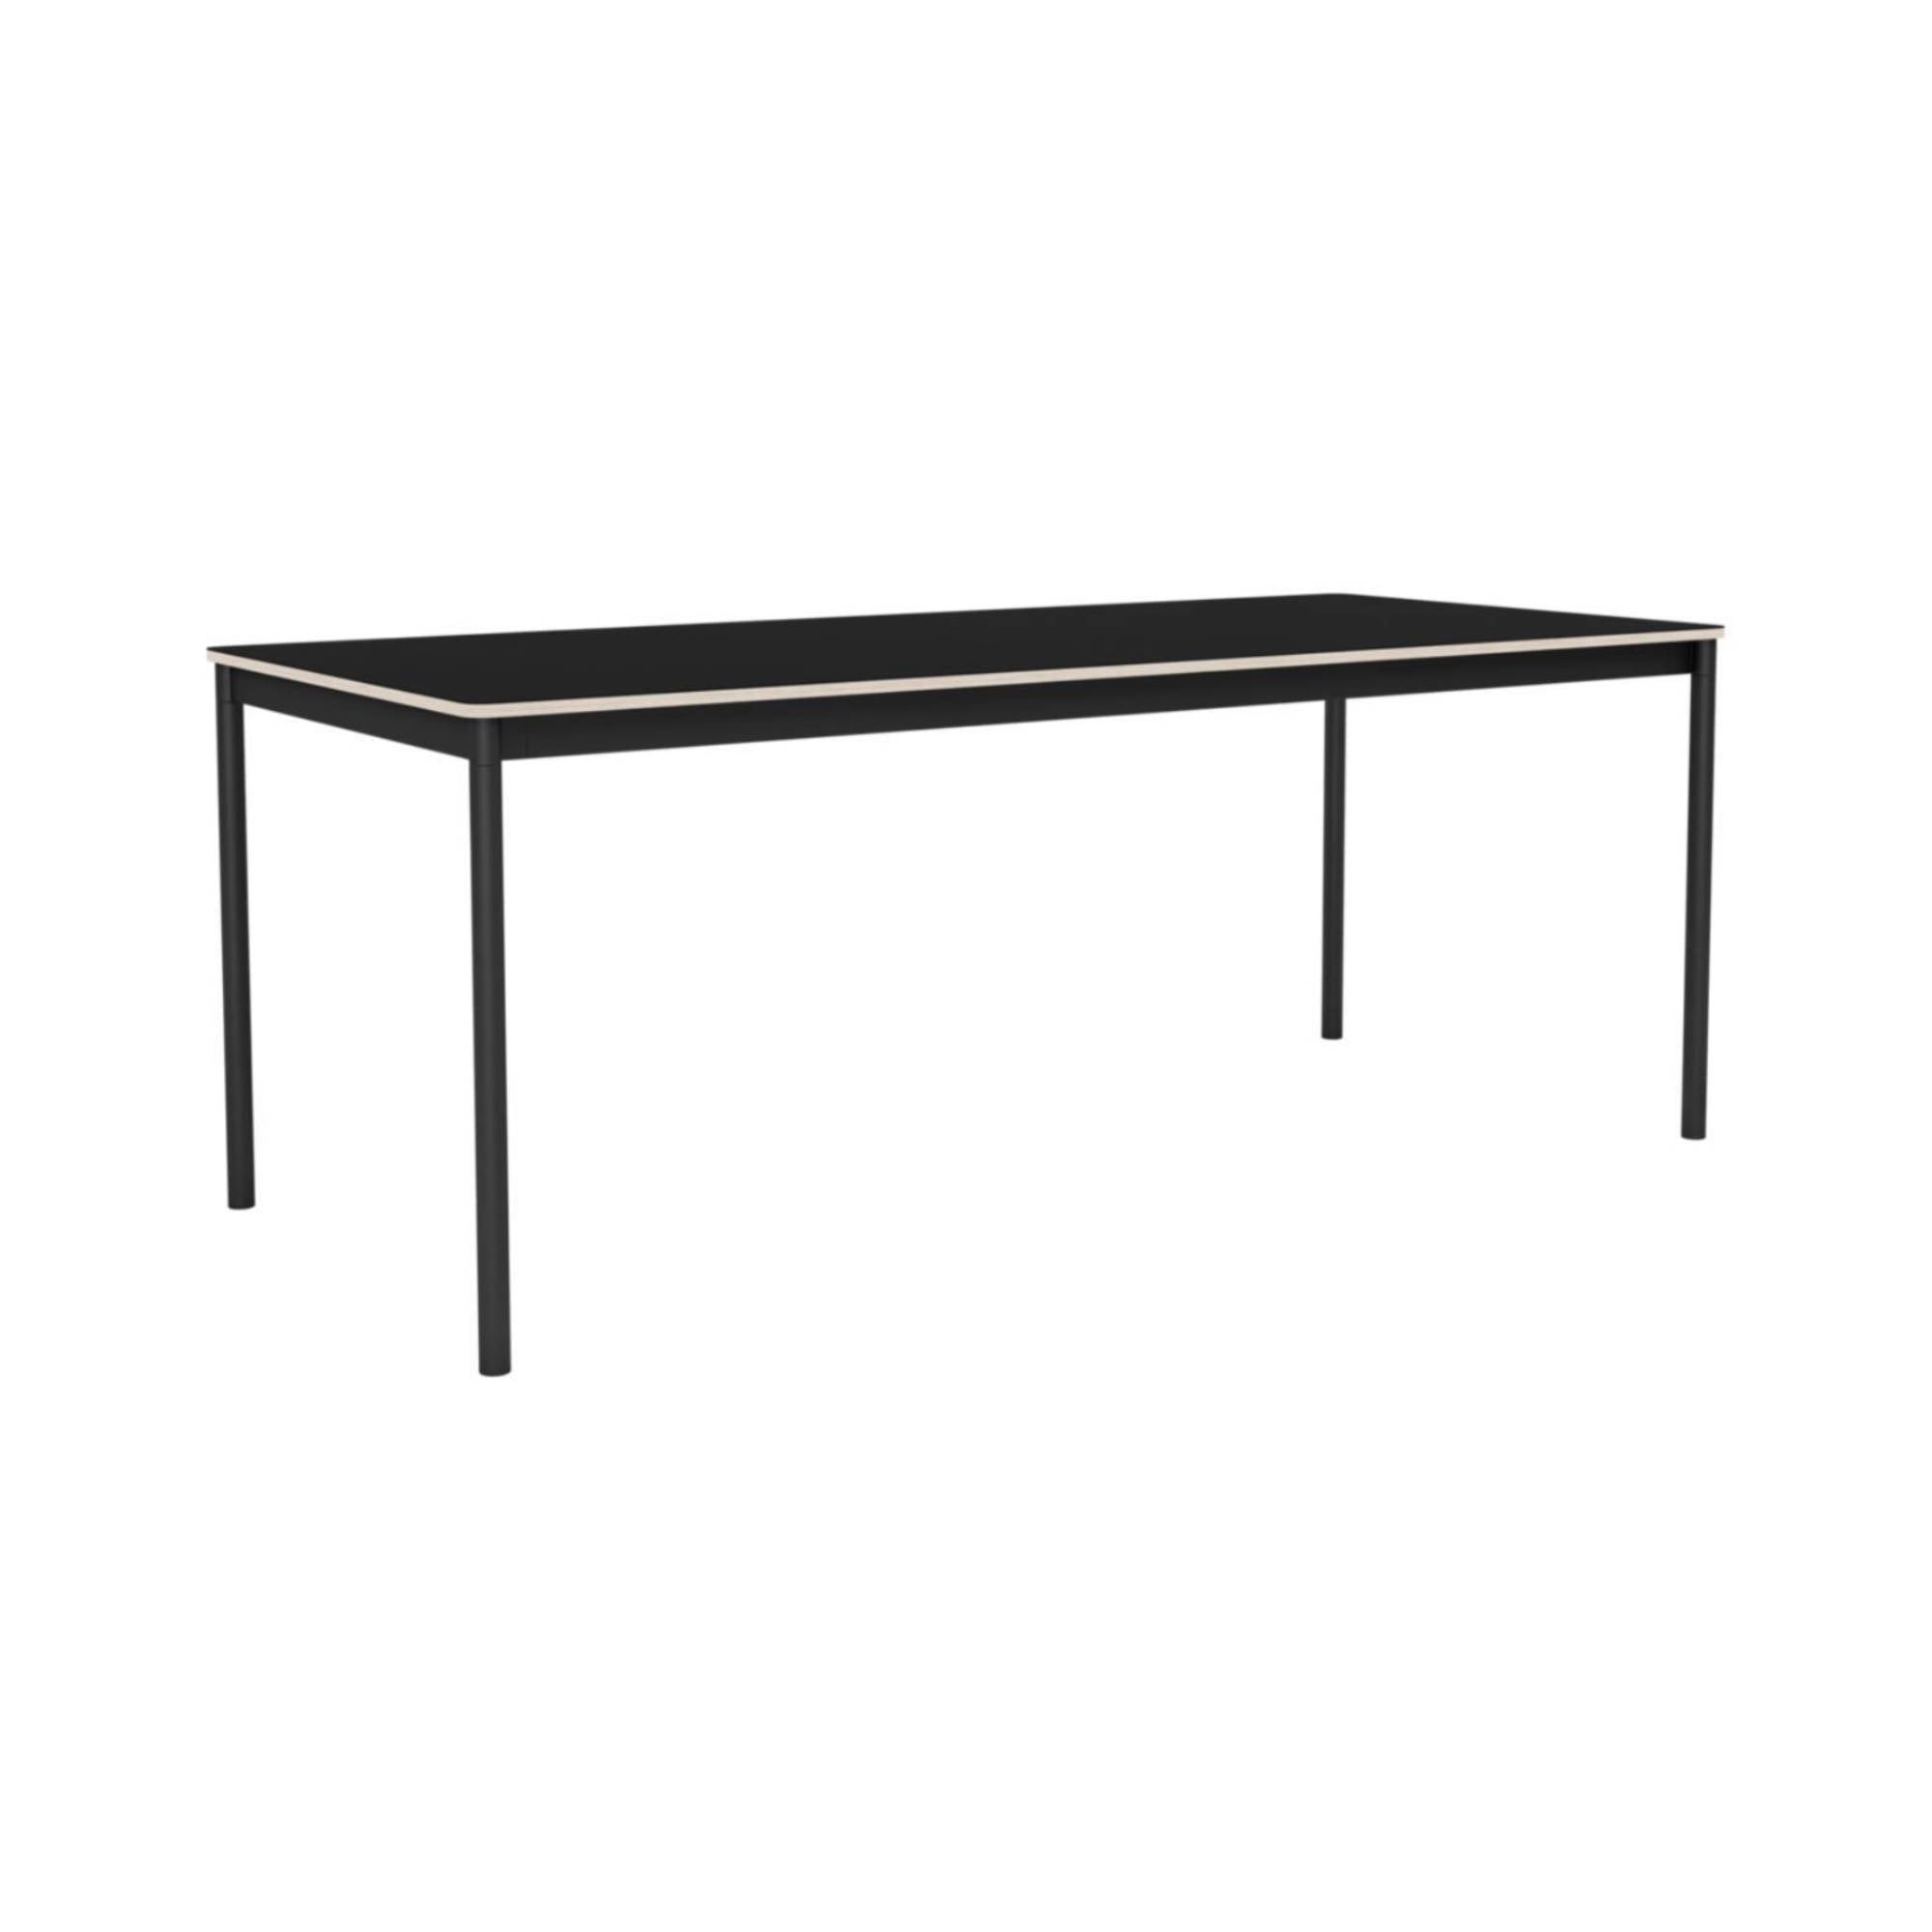 Base Table: Medium + Black Laminate + Plywood Edge + Black